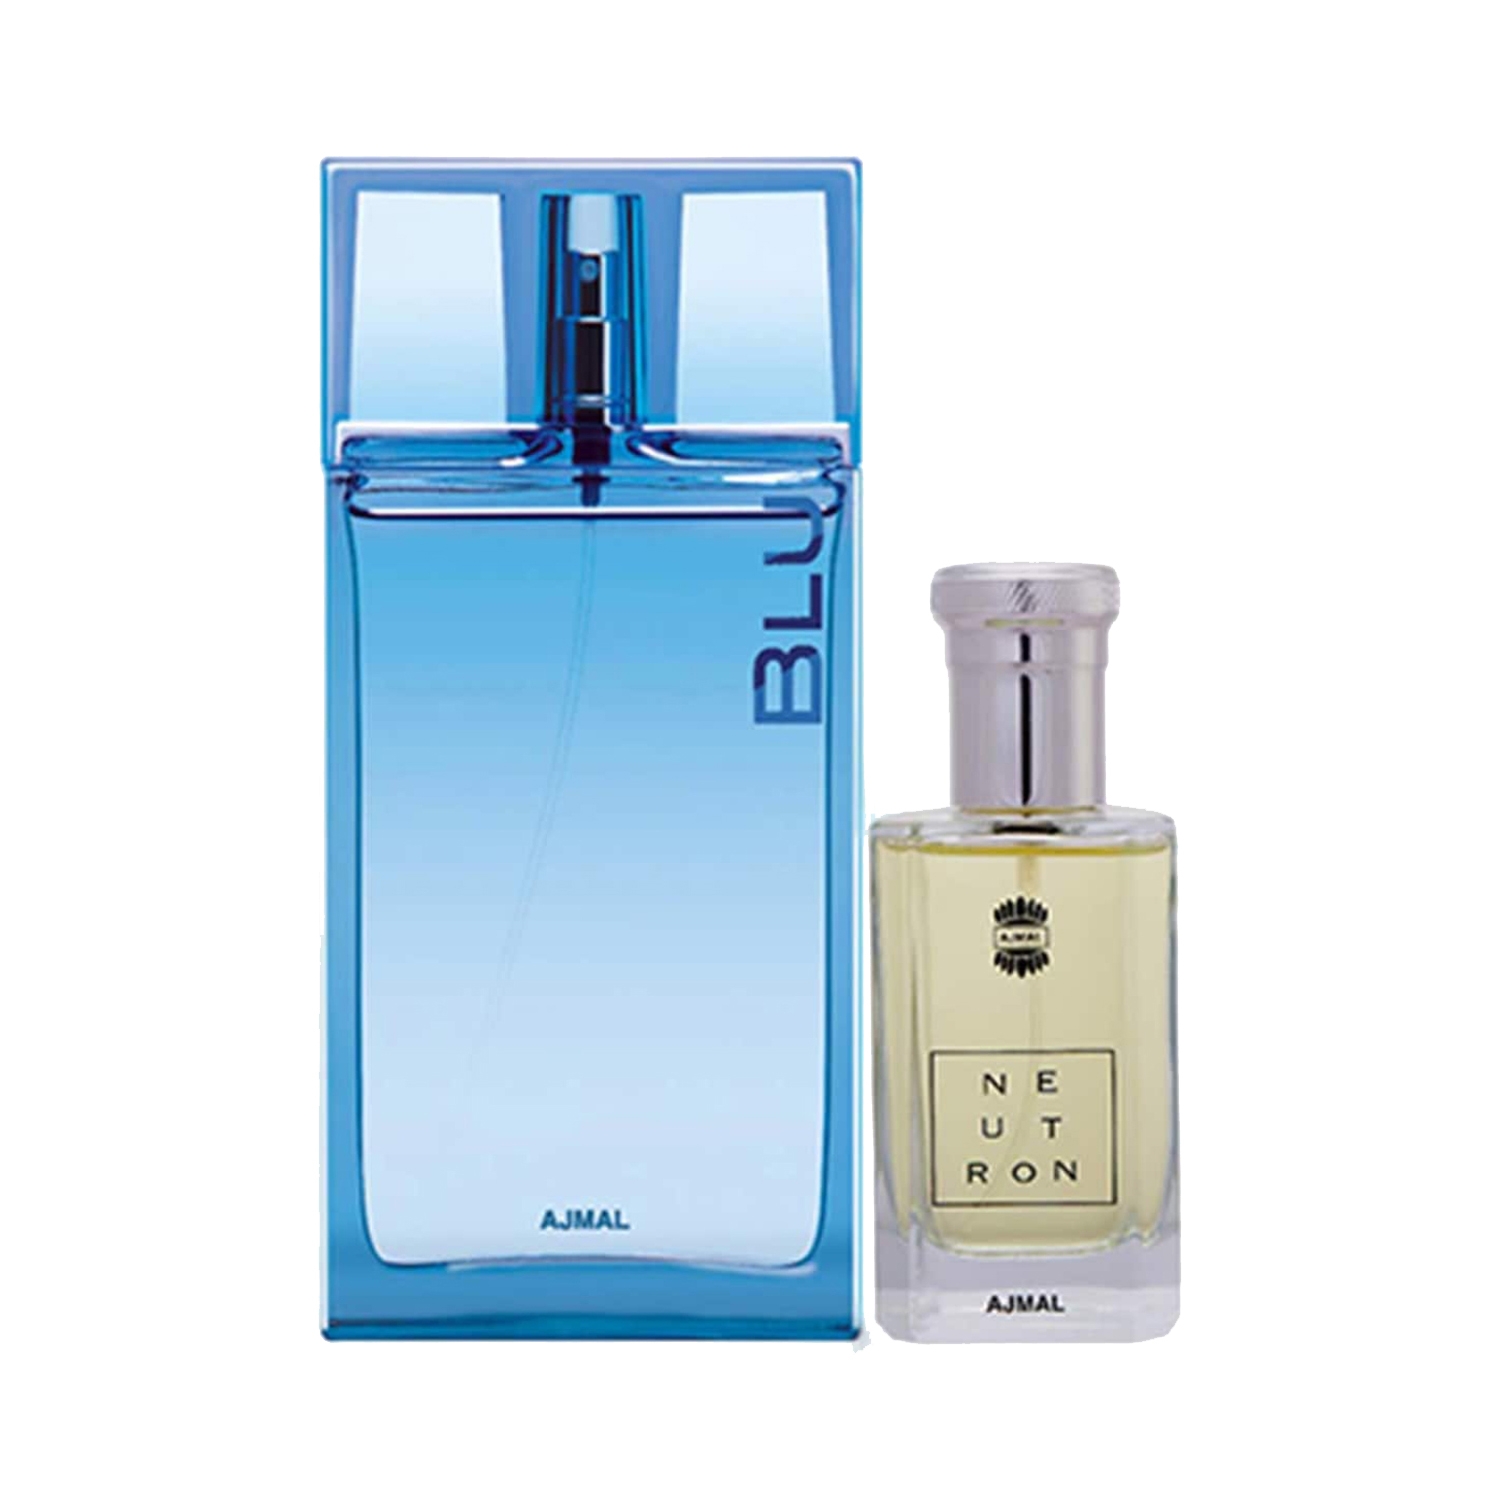 Ajmal | Ajmal Blu Eau De Parfum Aquatic Woody Perfume And Neutron Eau De Parfum Citrus Fruity Perfume - (2Pcs)